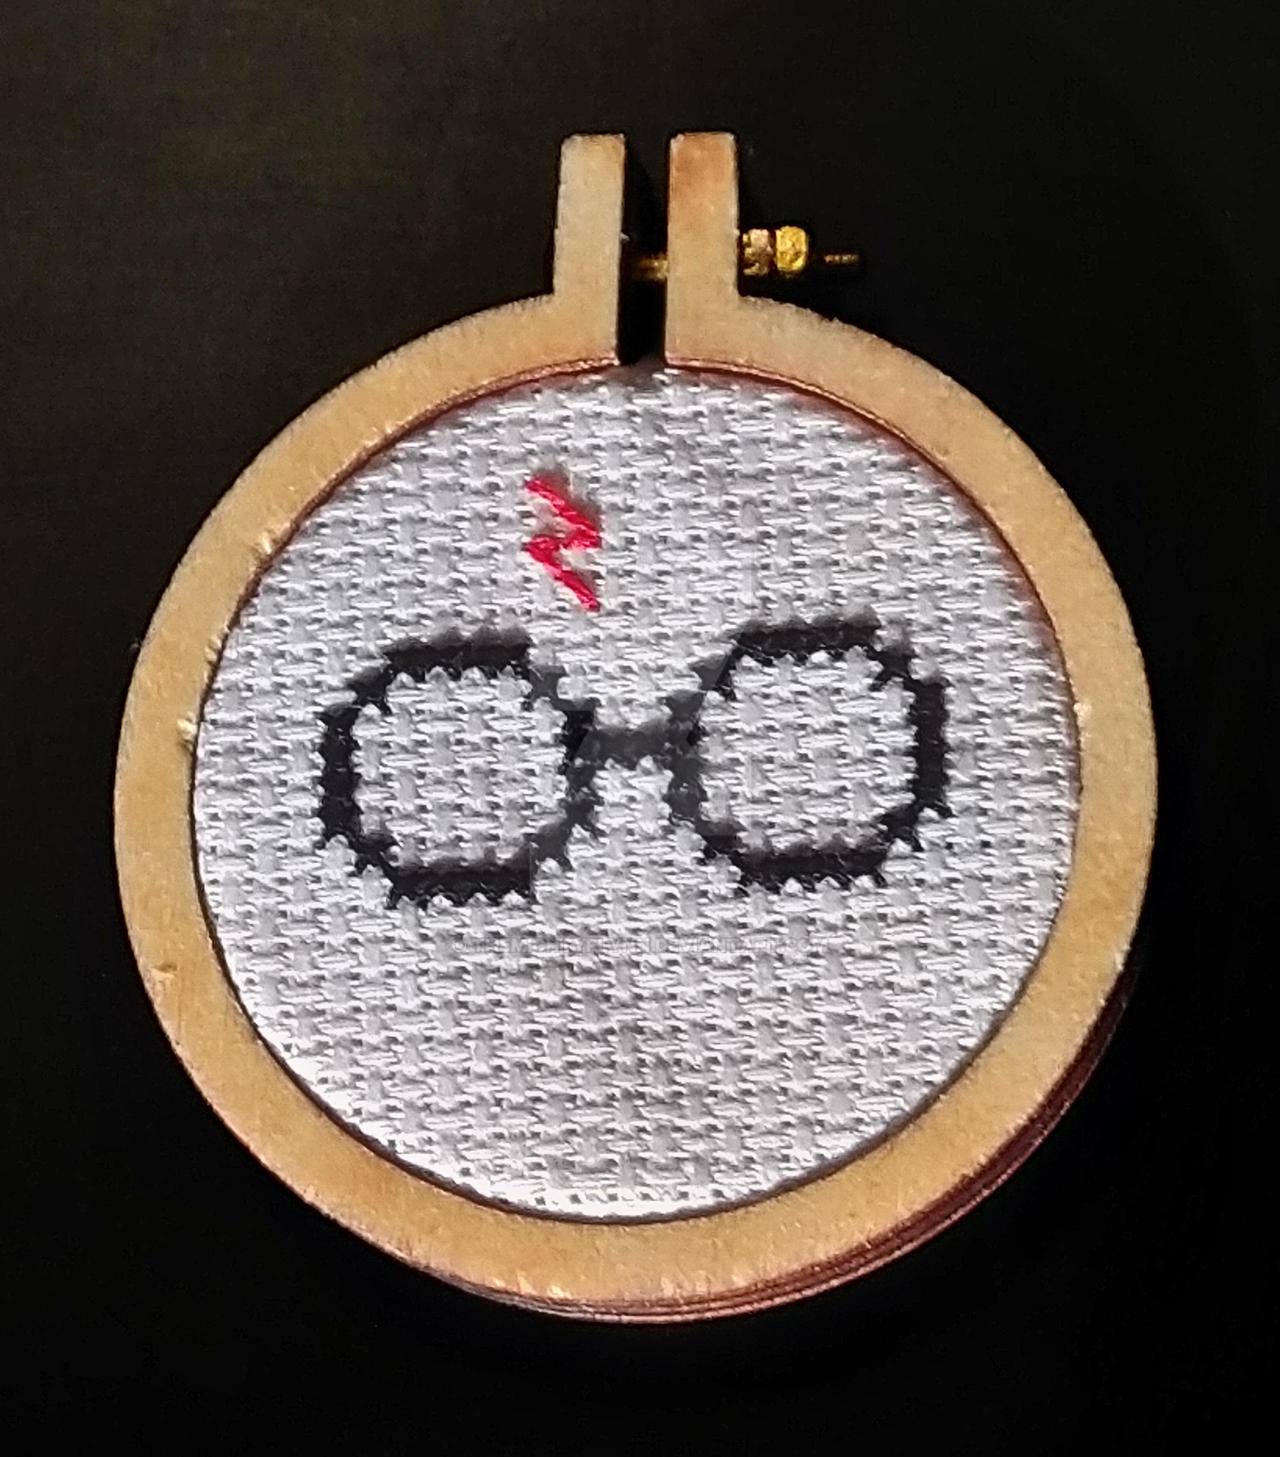 Harry Potter Cross Stitch by themightyflynn on DeviantArt